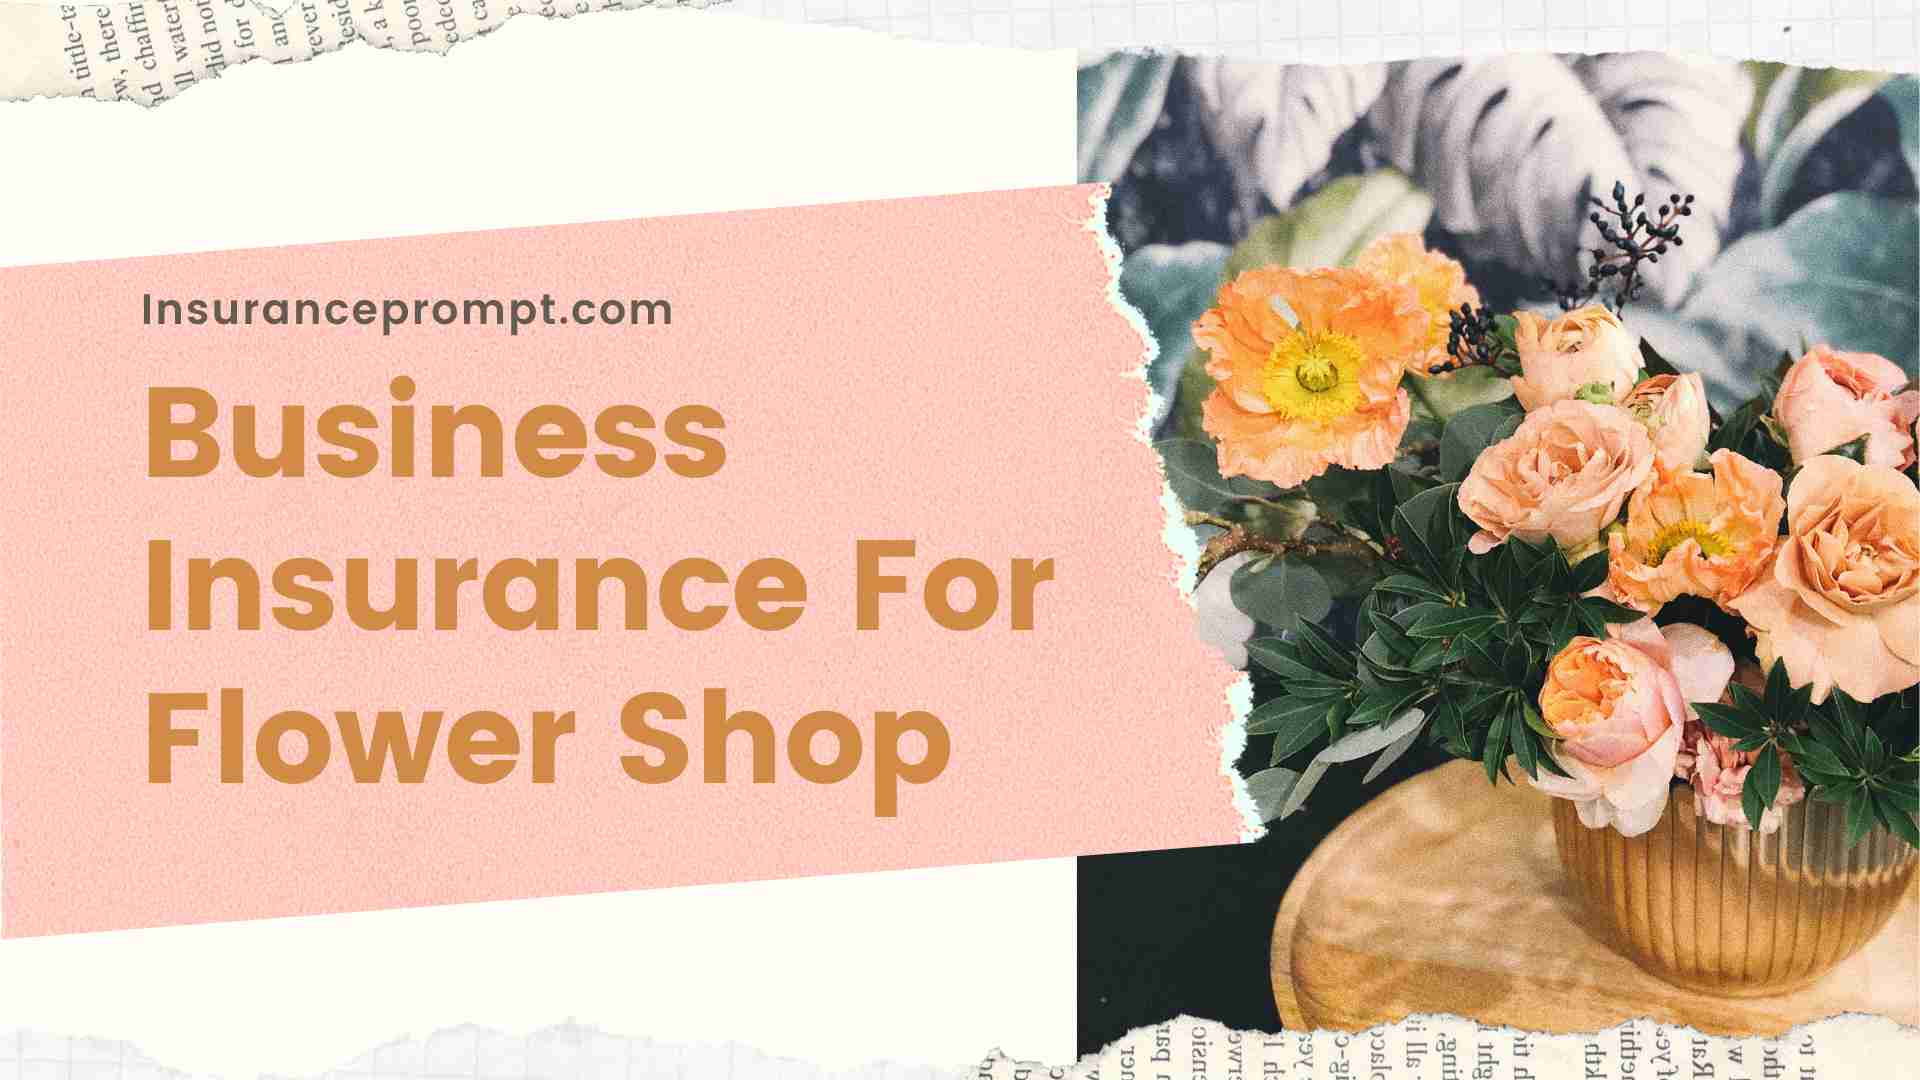 Business Insurance For Flower Shop